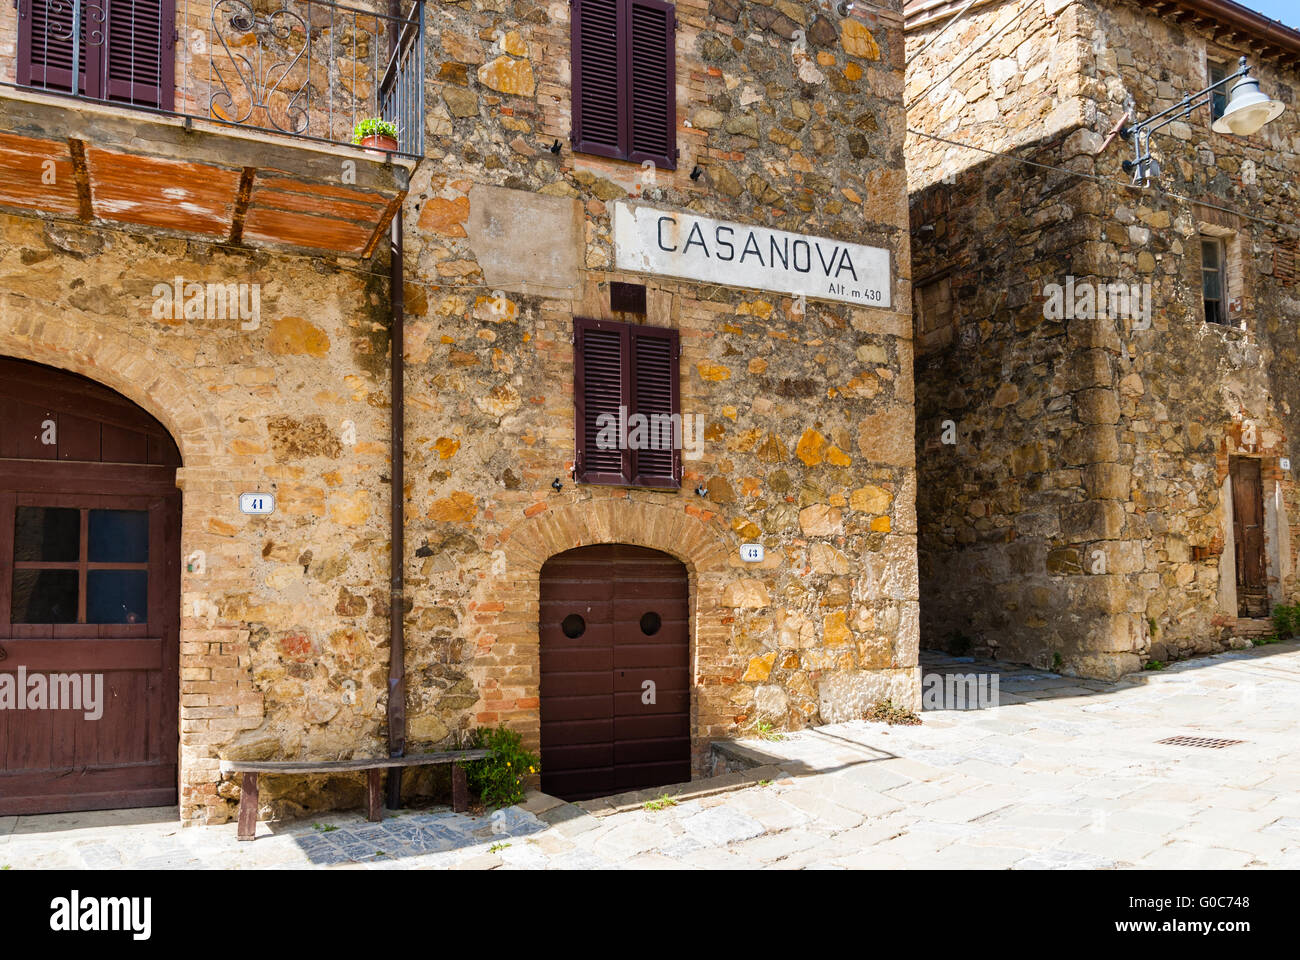 Casanova, small village to the south of Siena Stock Photo